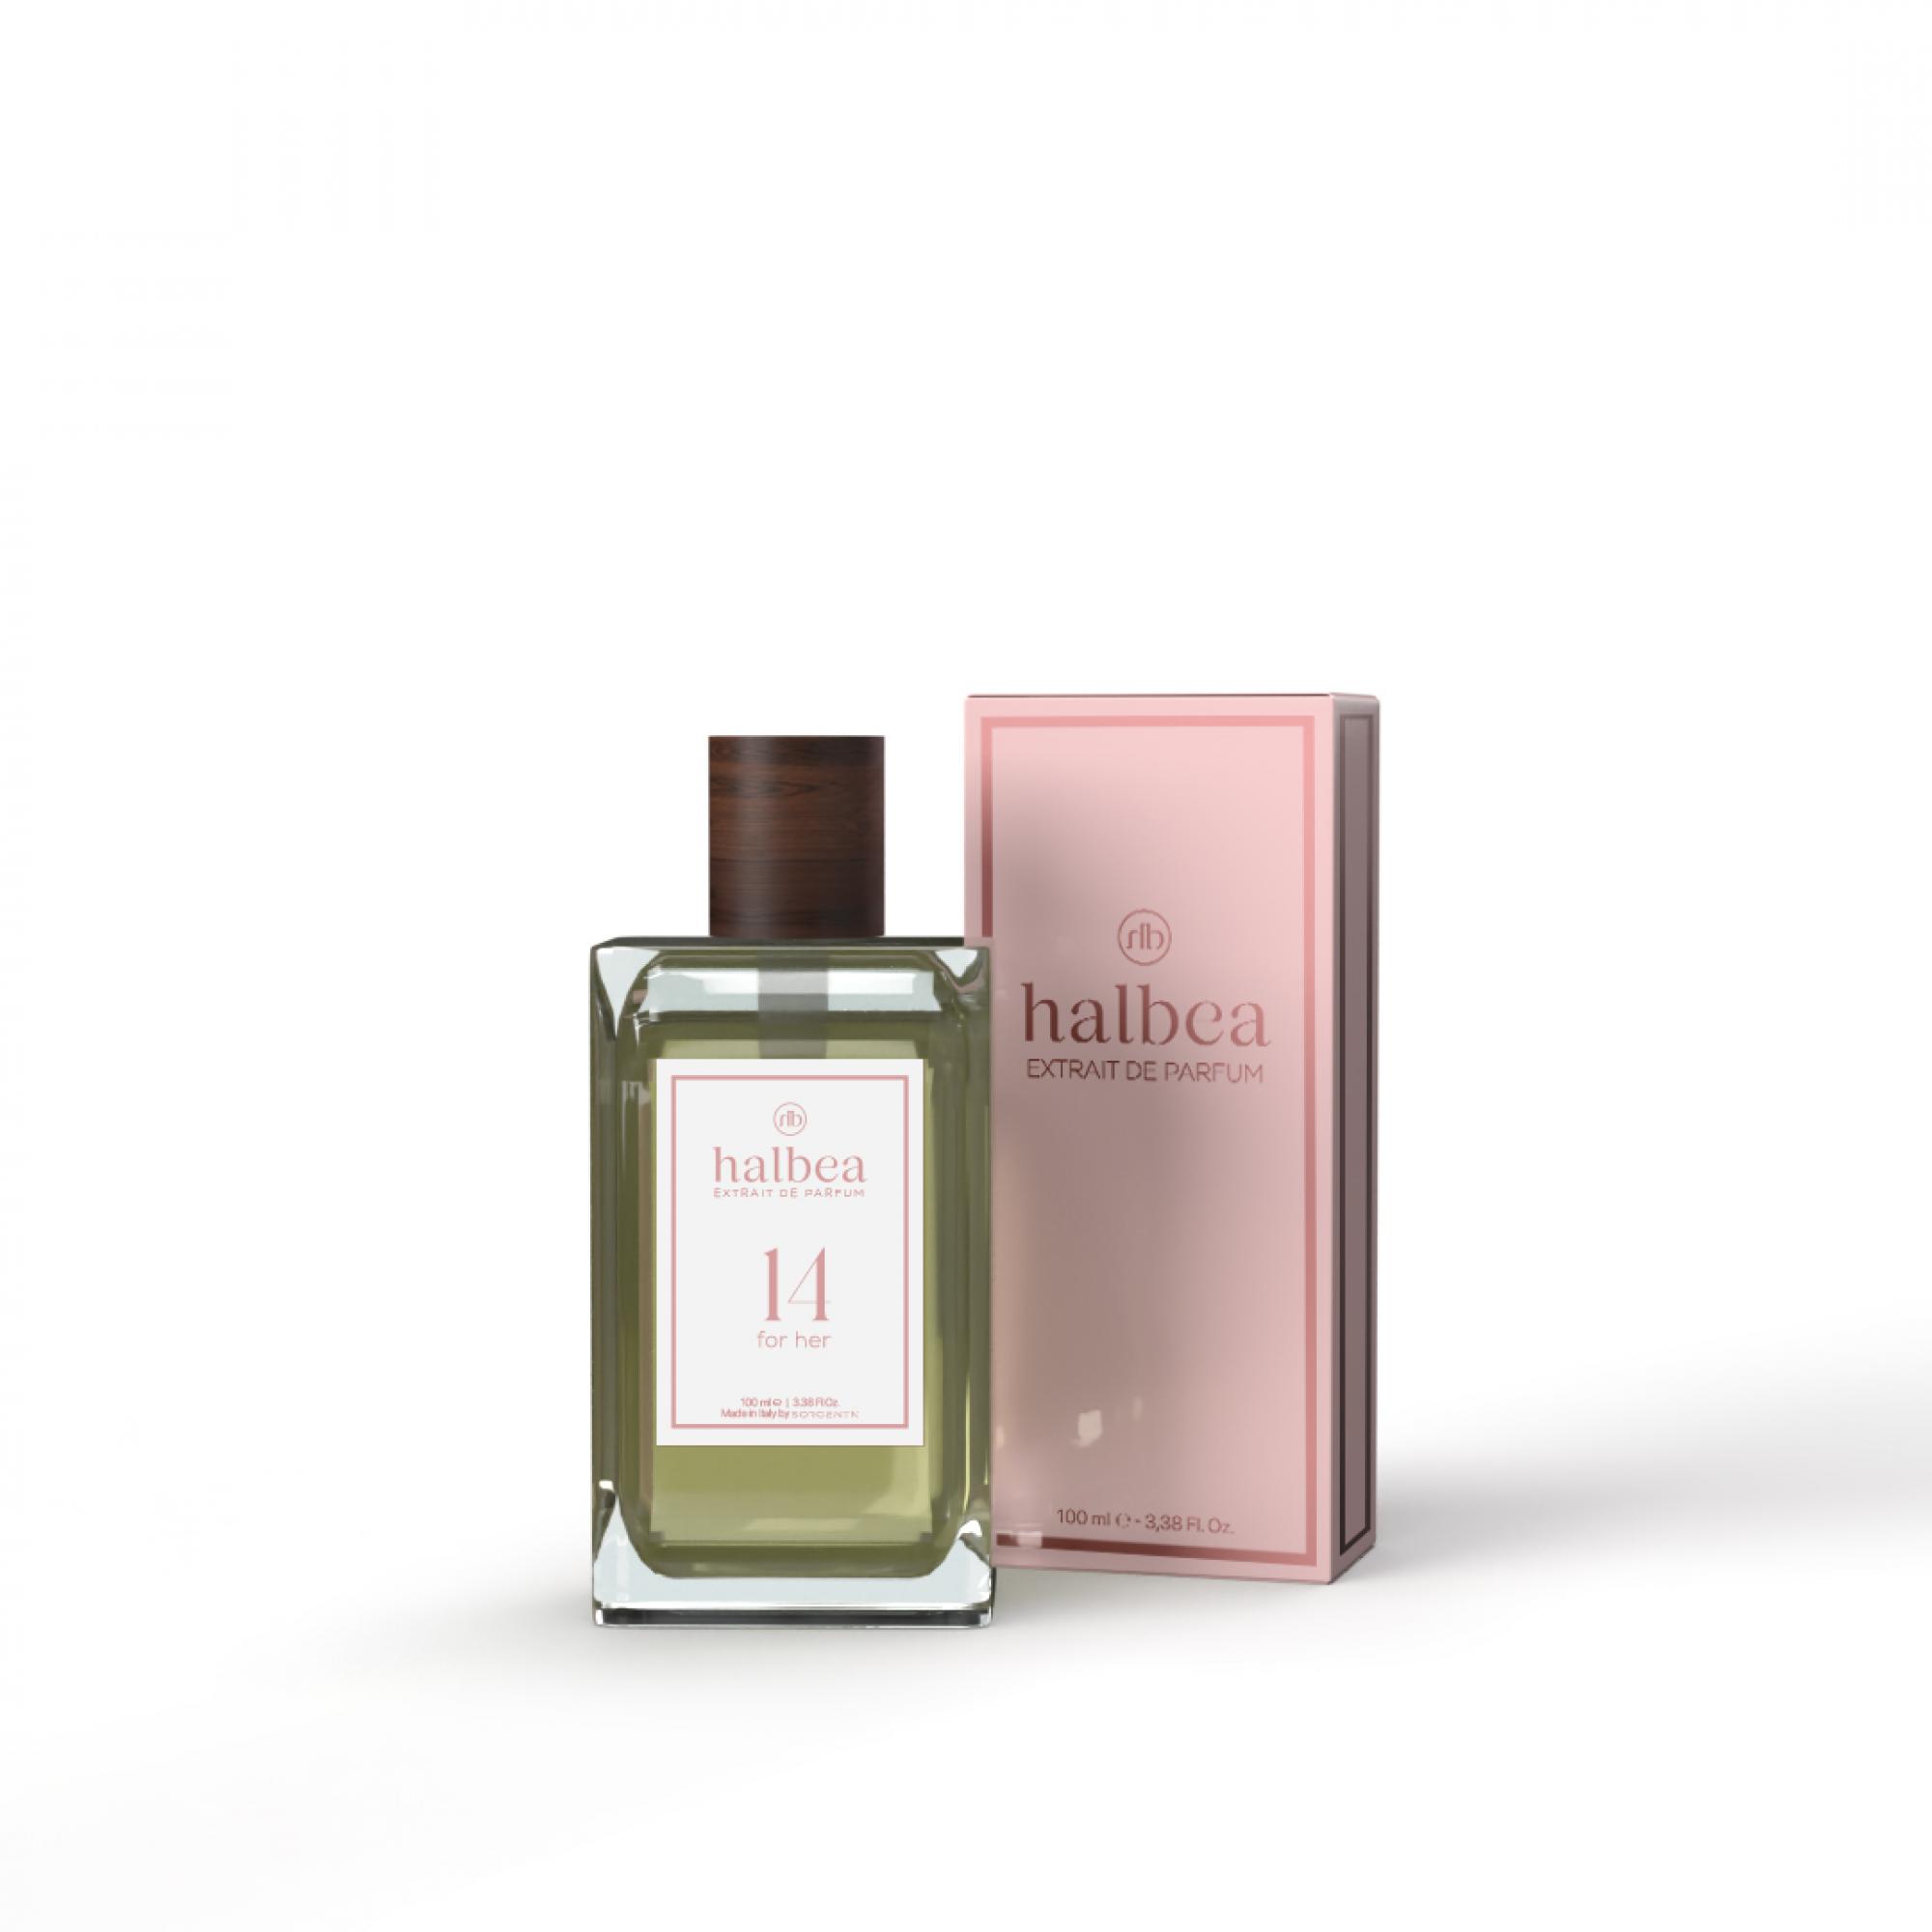 Halbea Parfum Nr. 14 insp. by Di J Adore Dior 100ml